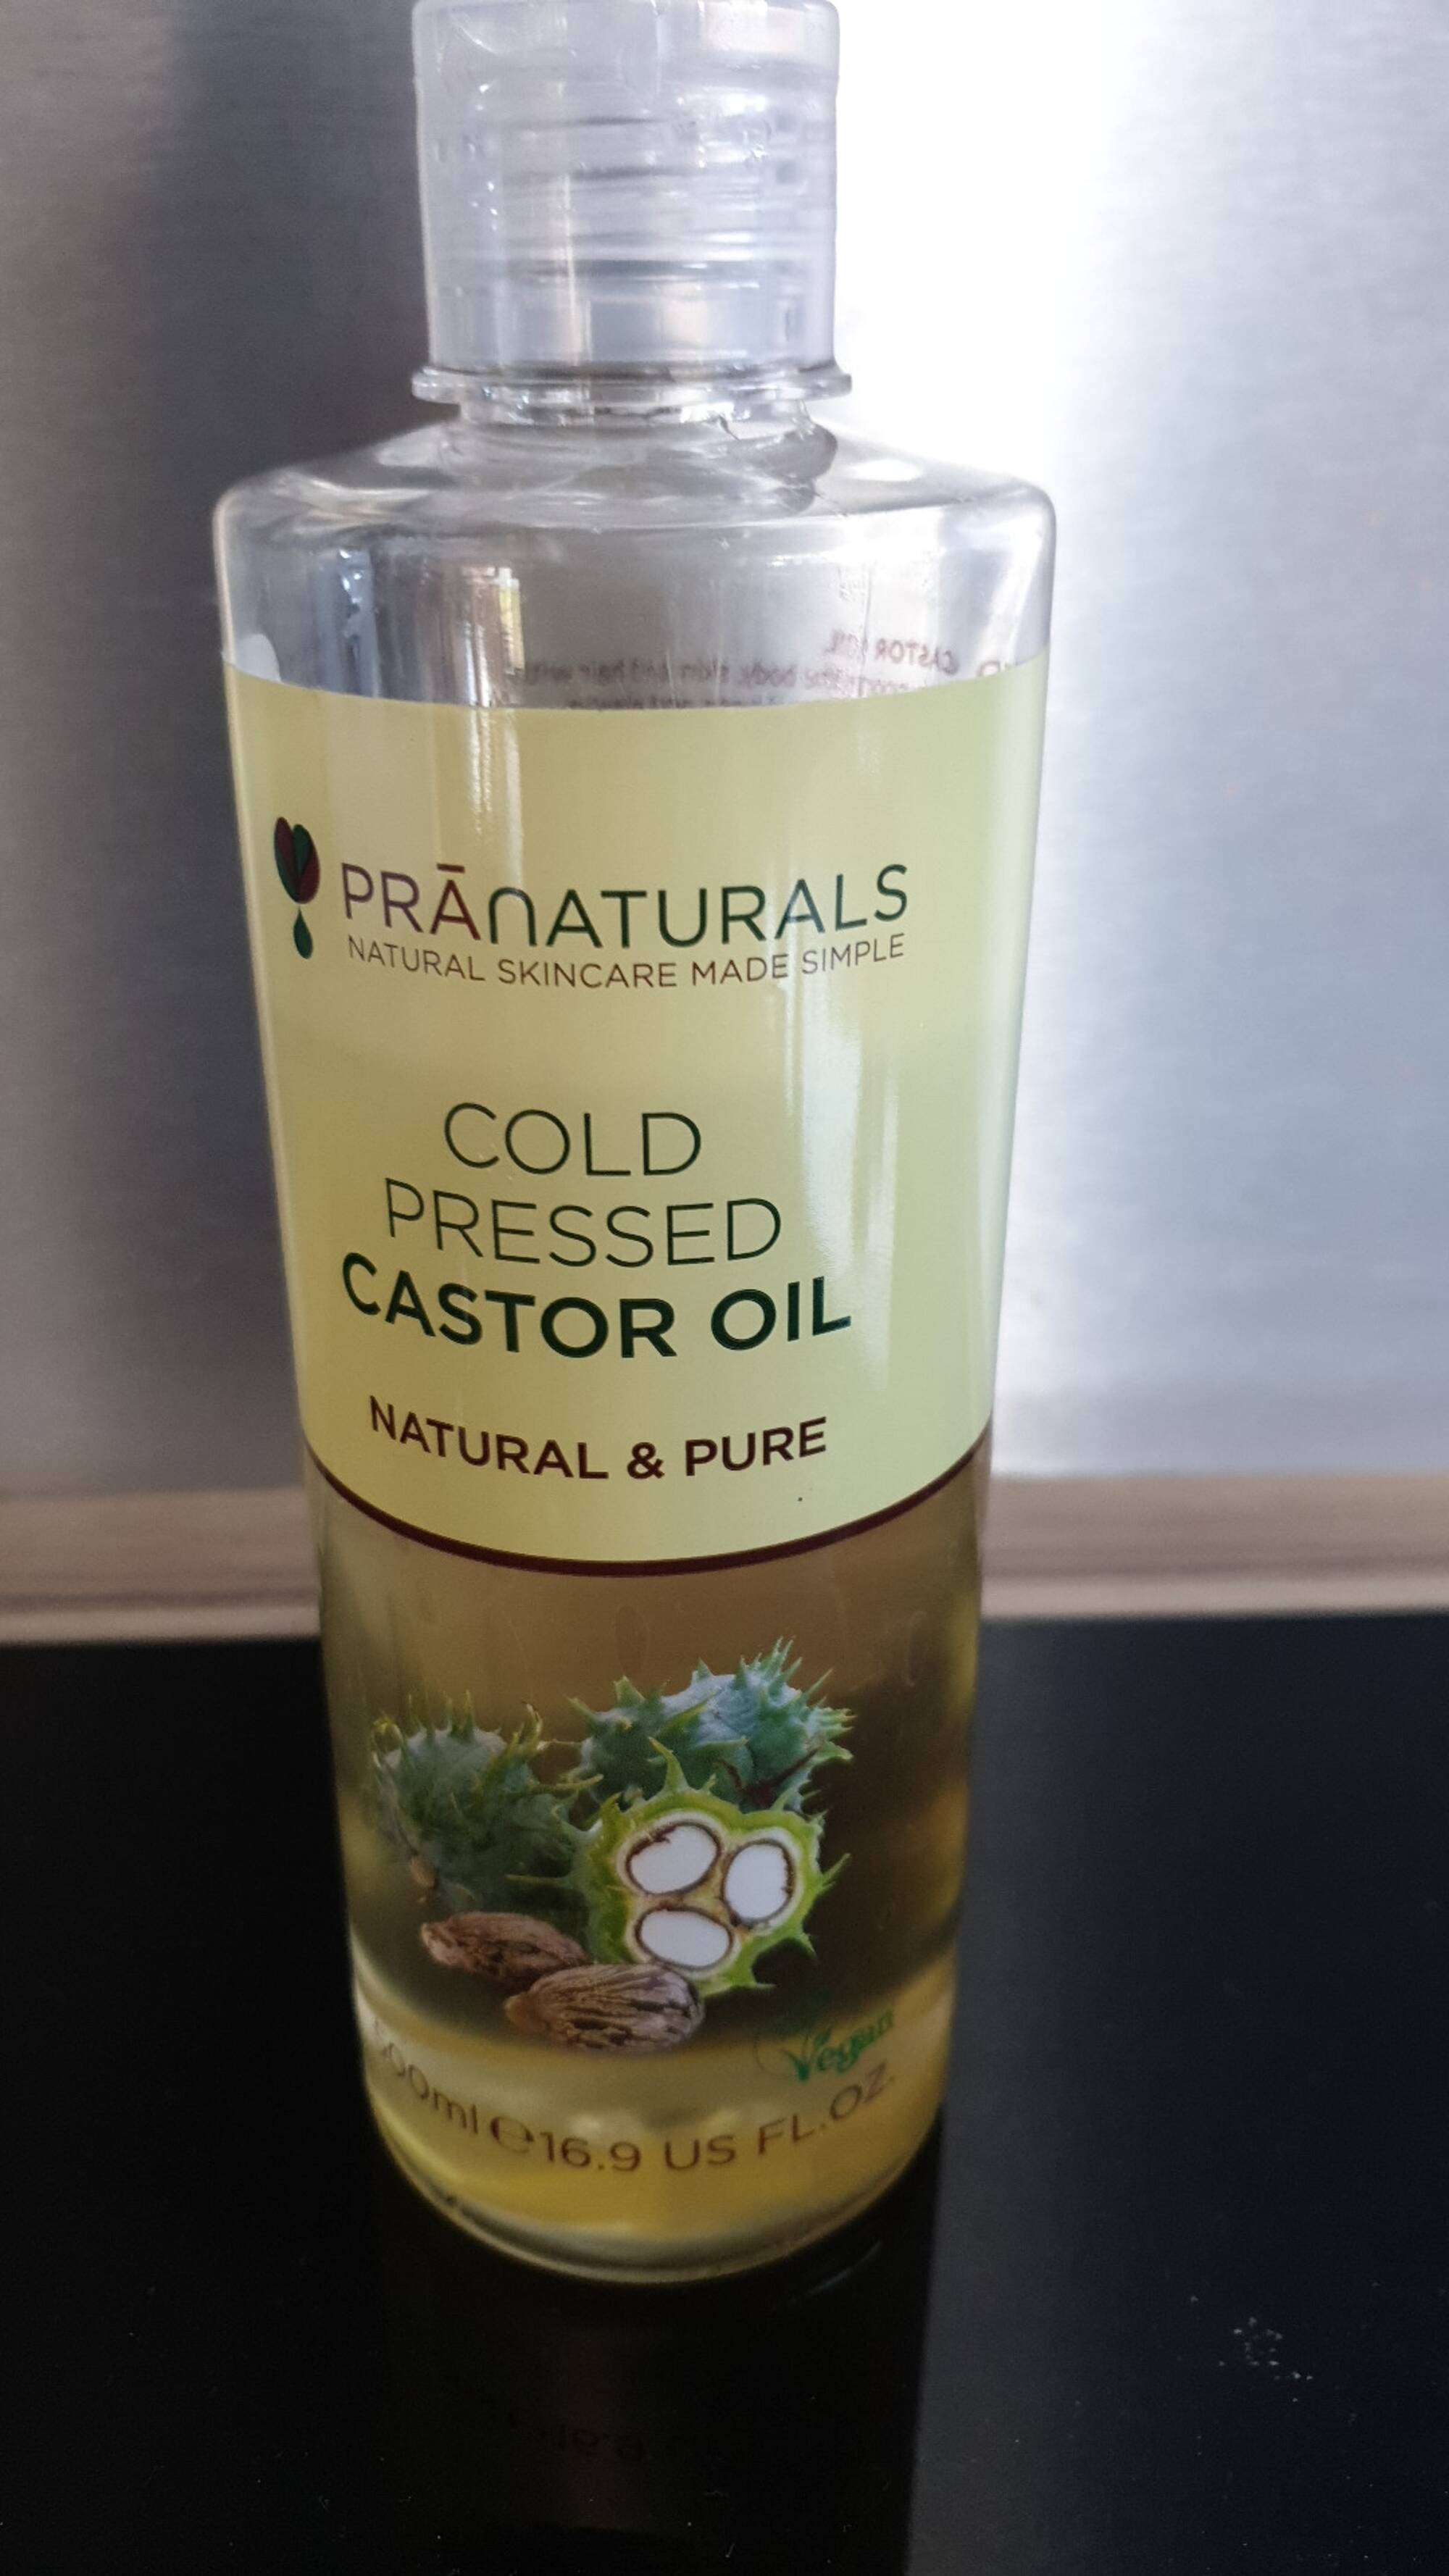 PRANATURALS - Cold pressed castor oil